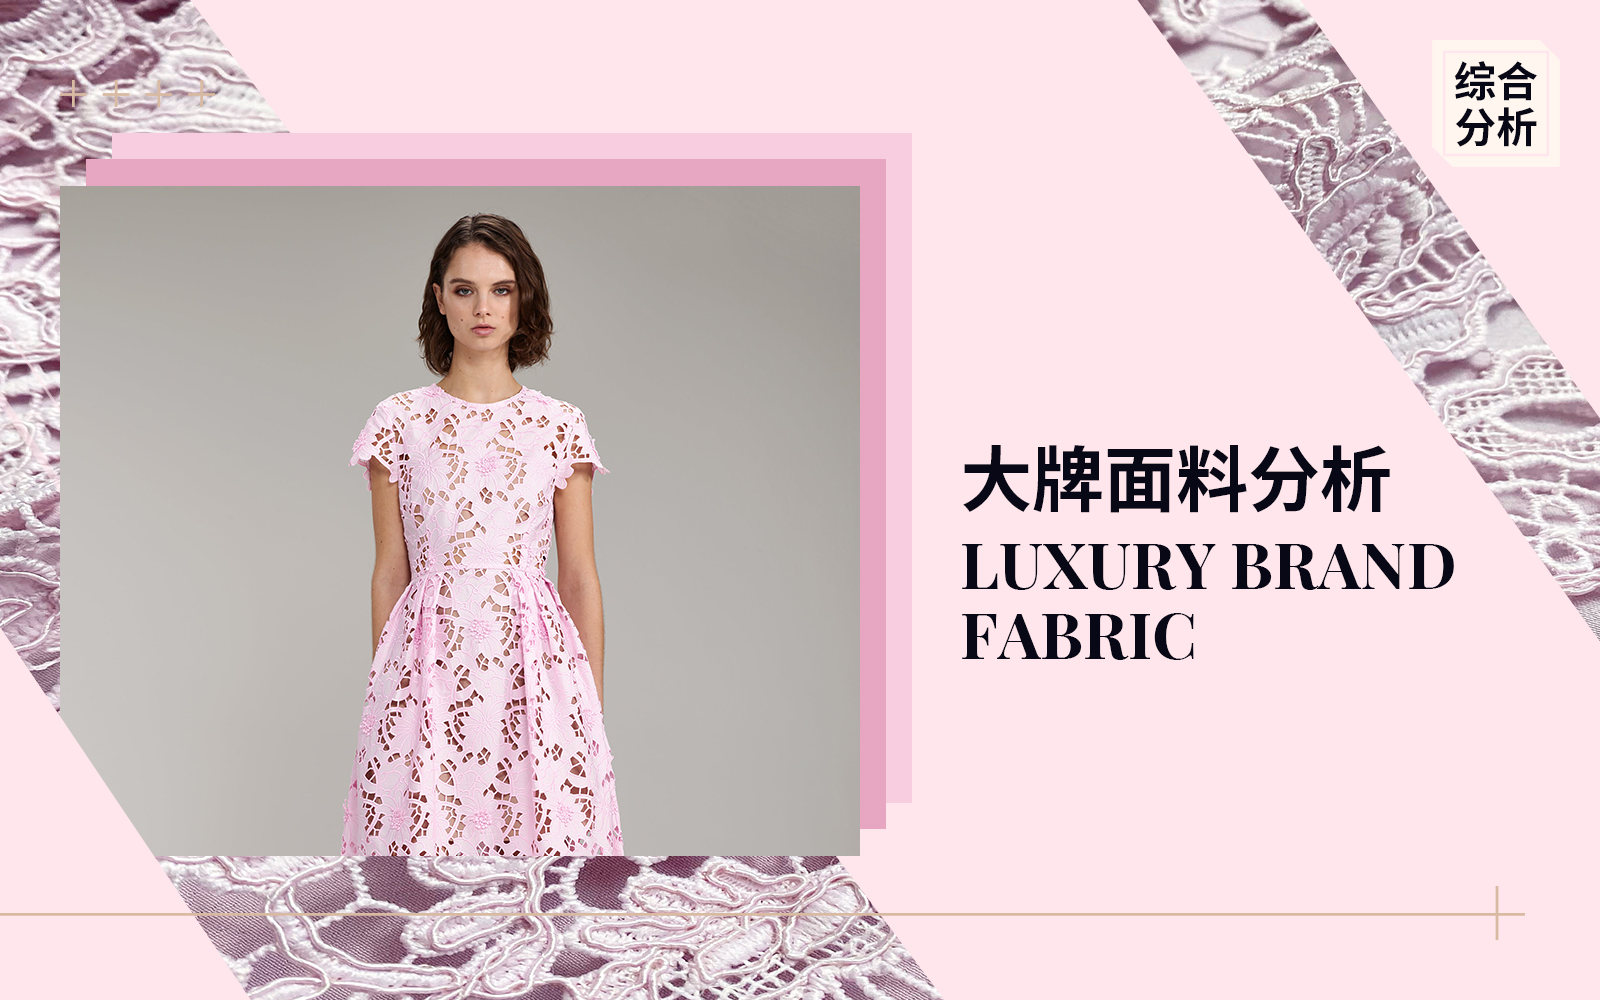 Elegant Lace -- The Fabric Analysis of Womenswear Brand